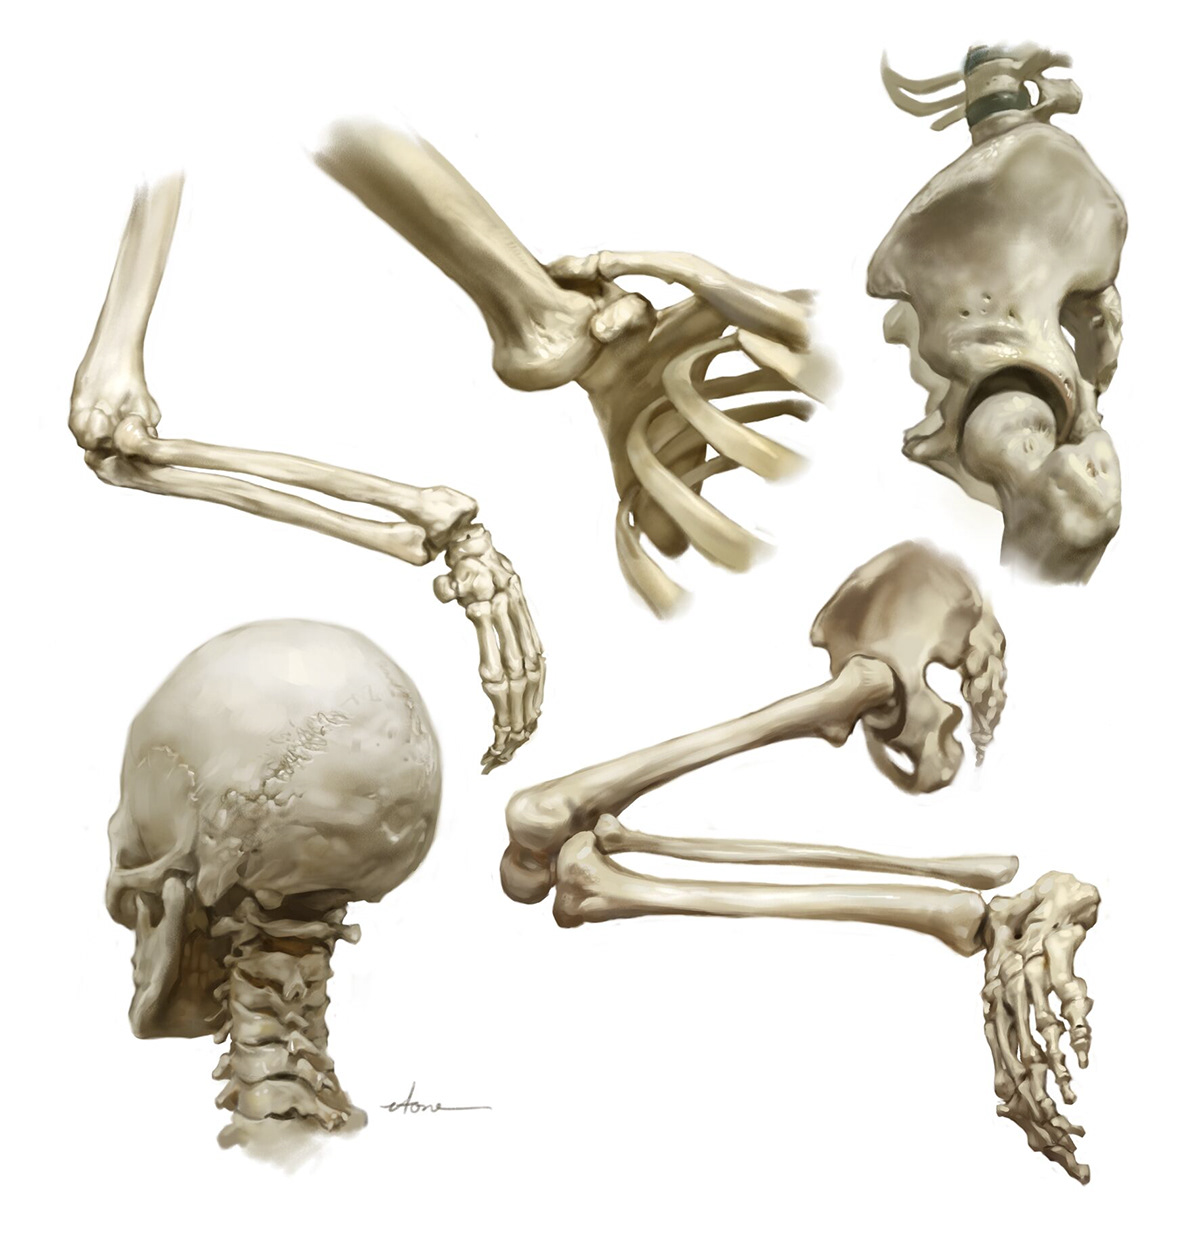 anatomy bones Digital Art  medical illustration painting   skeleton skull